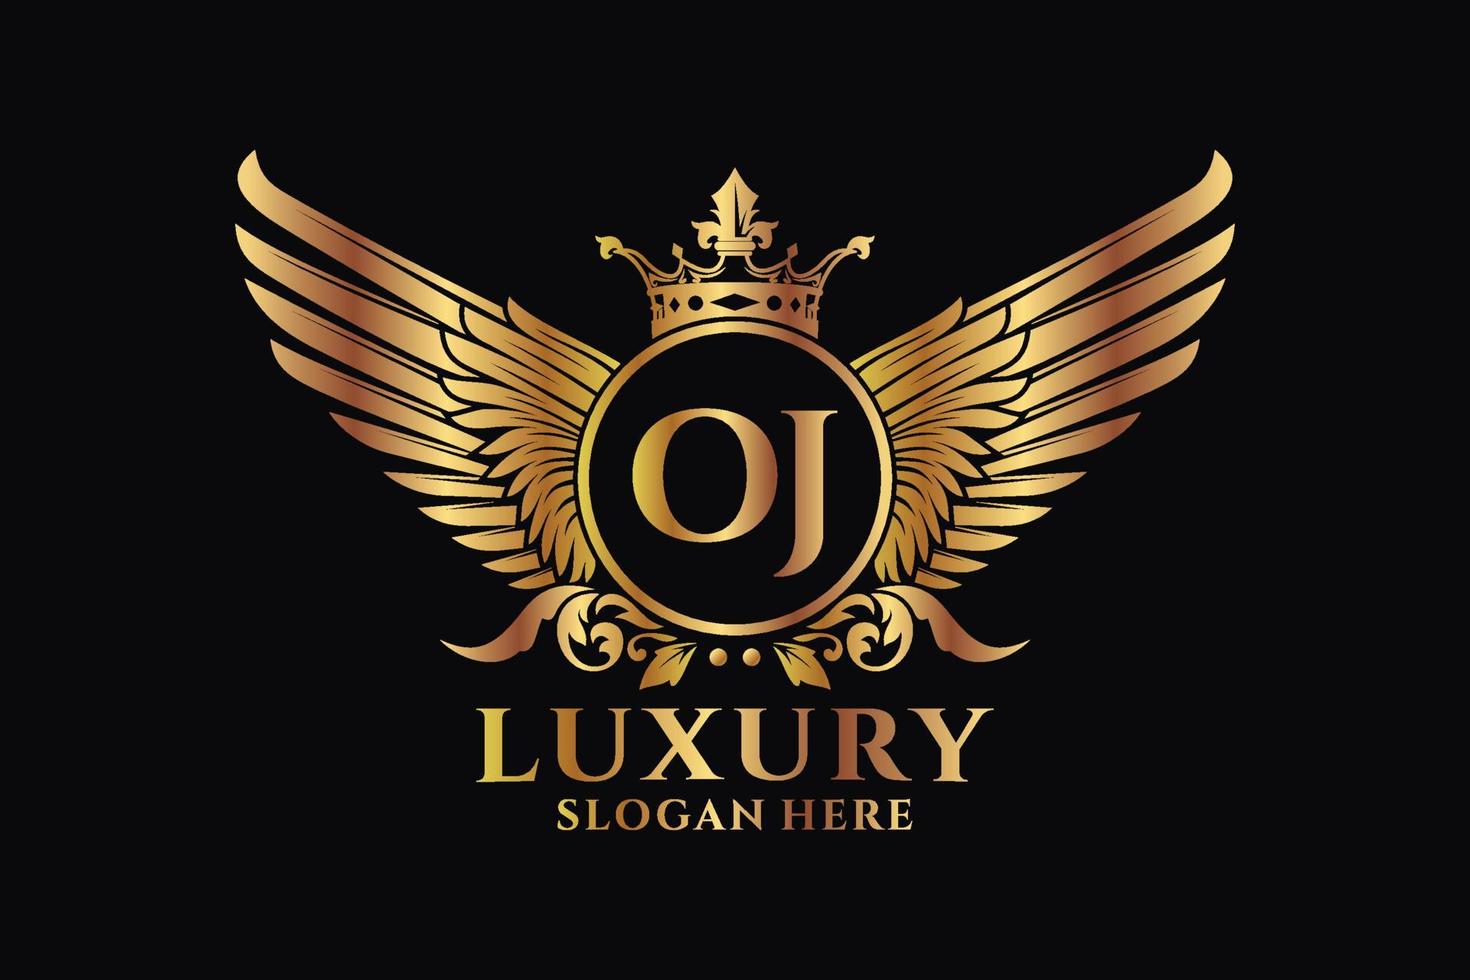 luxe Koninklijk vleugel brief oj kam goud kleur logo vector, zege logo, kam logo, vleugel logo, vector logo sjabloon.